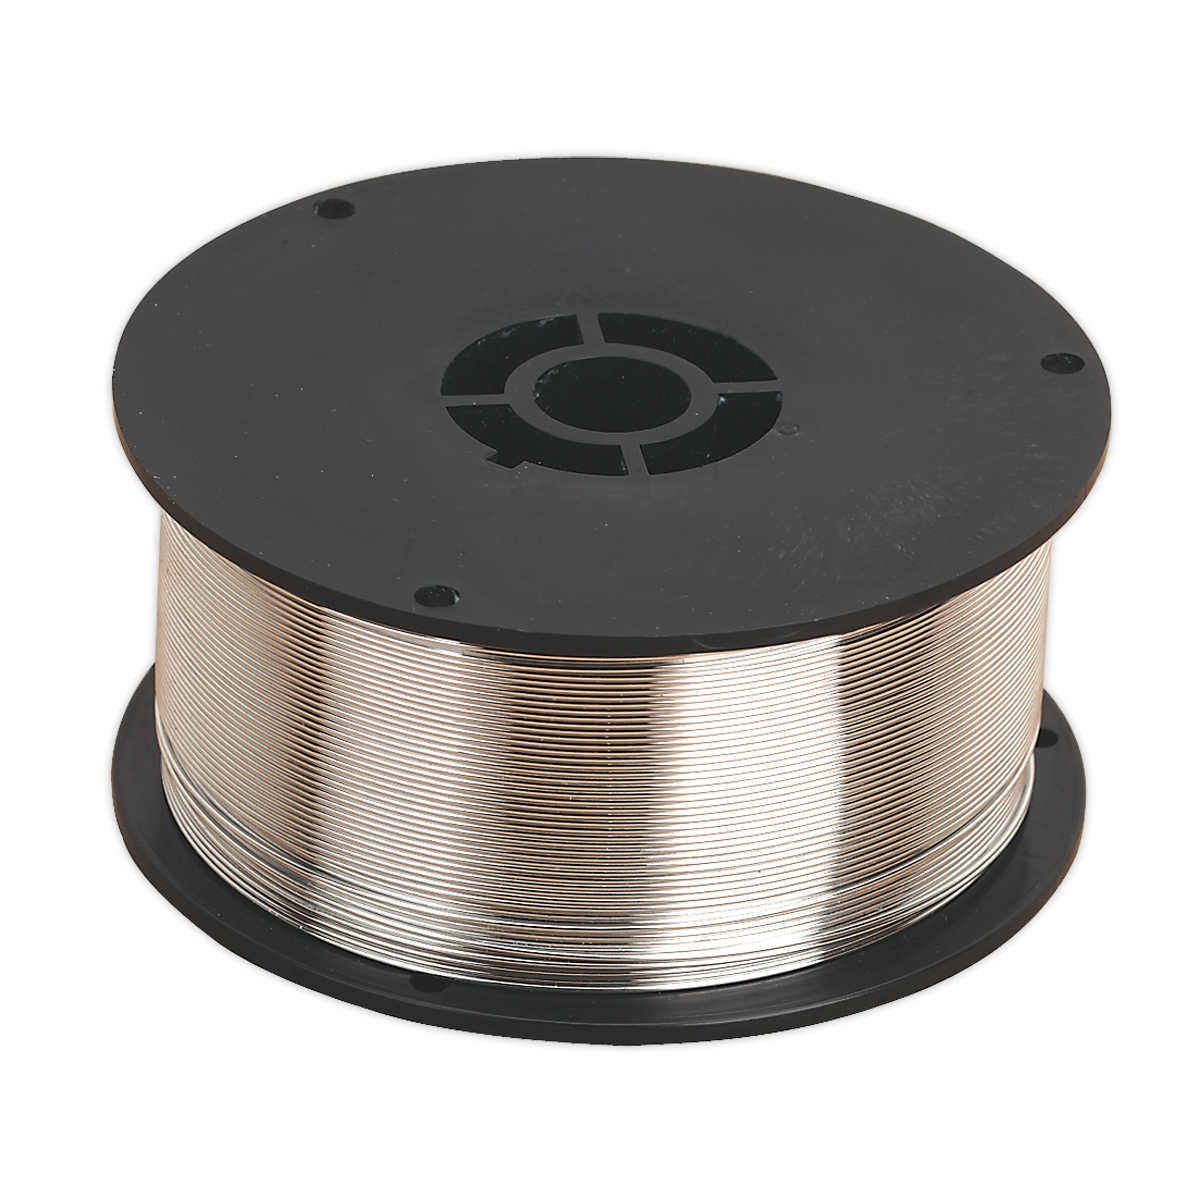 Sealey Aluminium MIG Wire 0.5kg 0.8mm 5356 (NG6) Grade